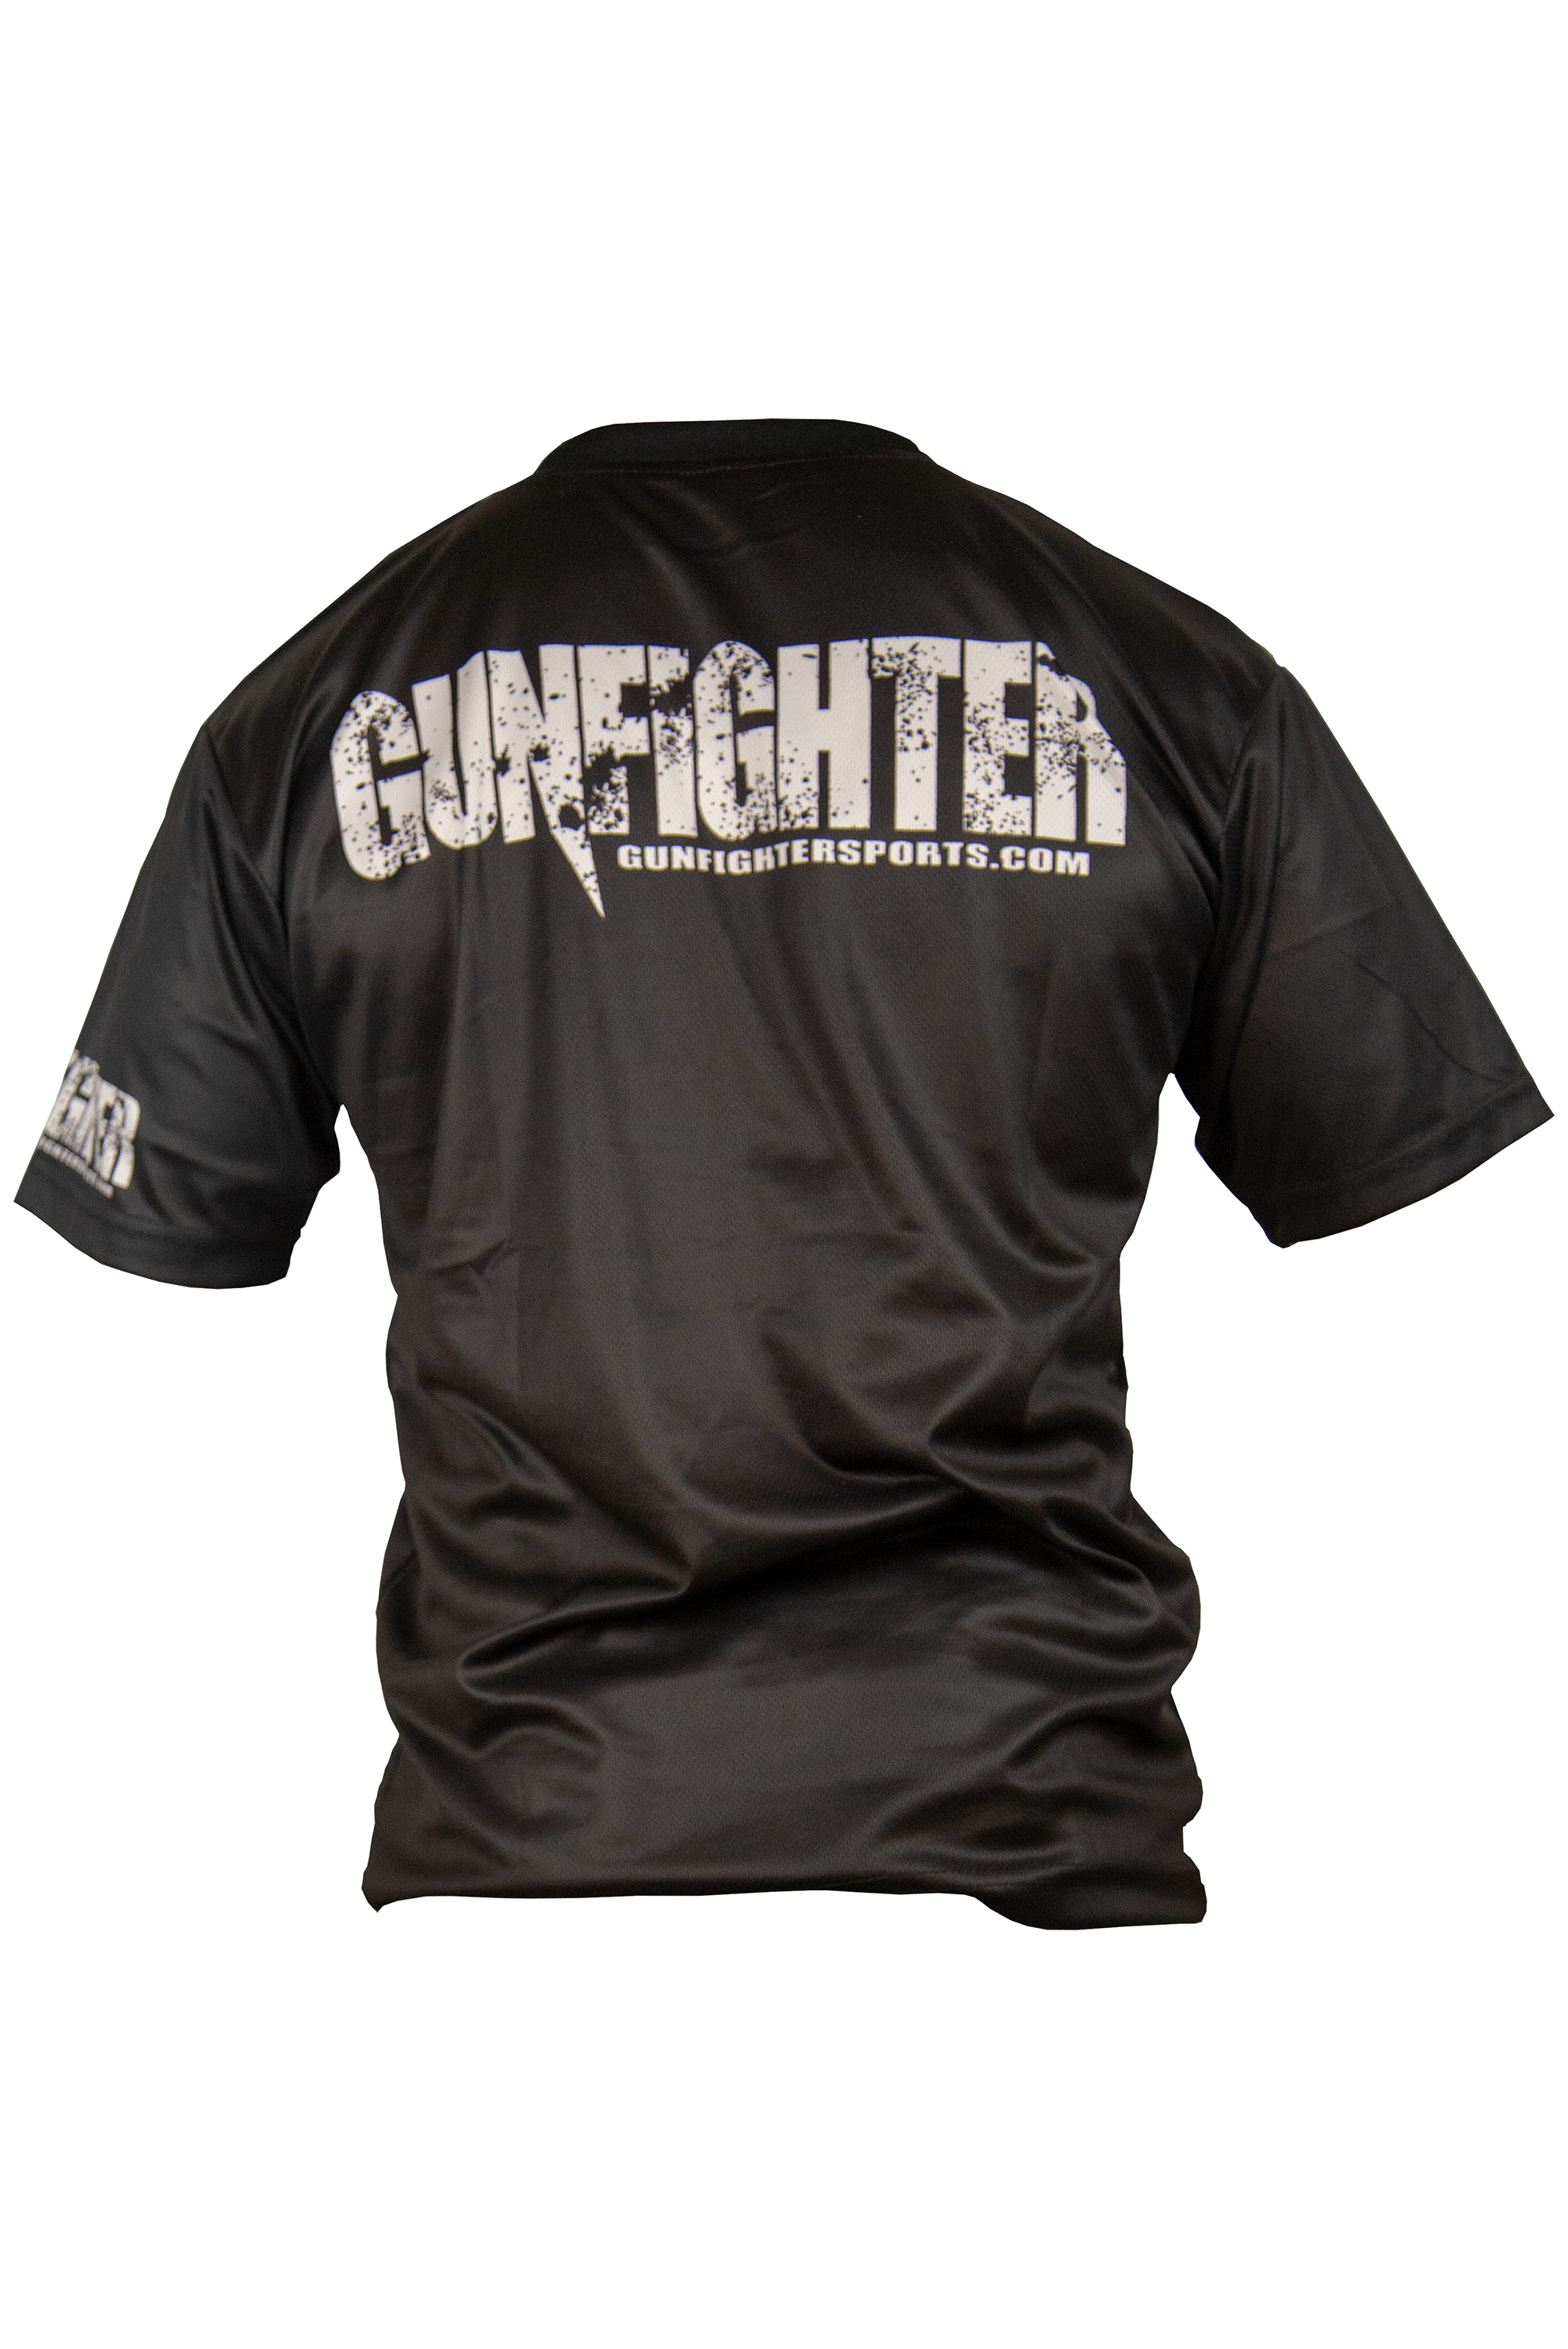 Gunfighter Sports dry fit - Black MISSPRINT